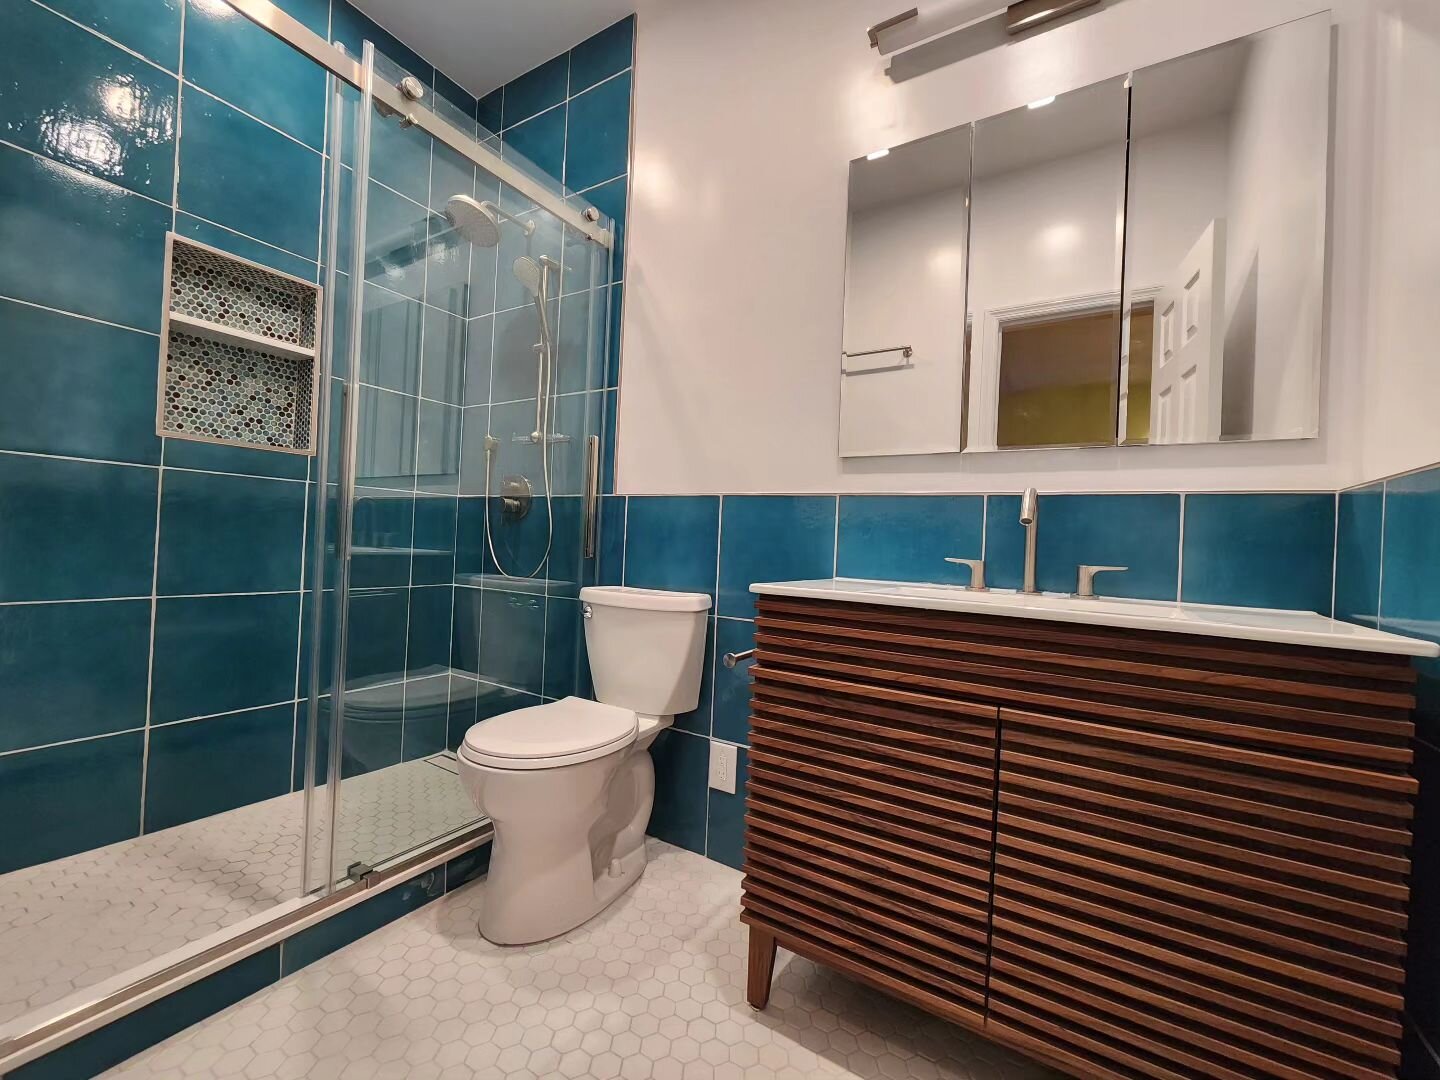 Completed! Bathroom renovation in South Slope
.
.
.
#bathroomrenovation #bathideas #bathroomdesign #interiordesign #custombathroom #customtile #tilebar #bluetile #customshower #womeninconstruction #generalcontractor #brooklynreno #apartmentdesign #ba